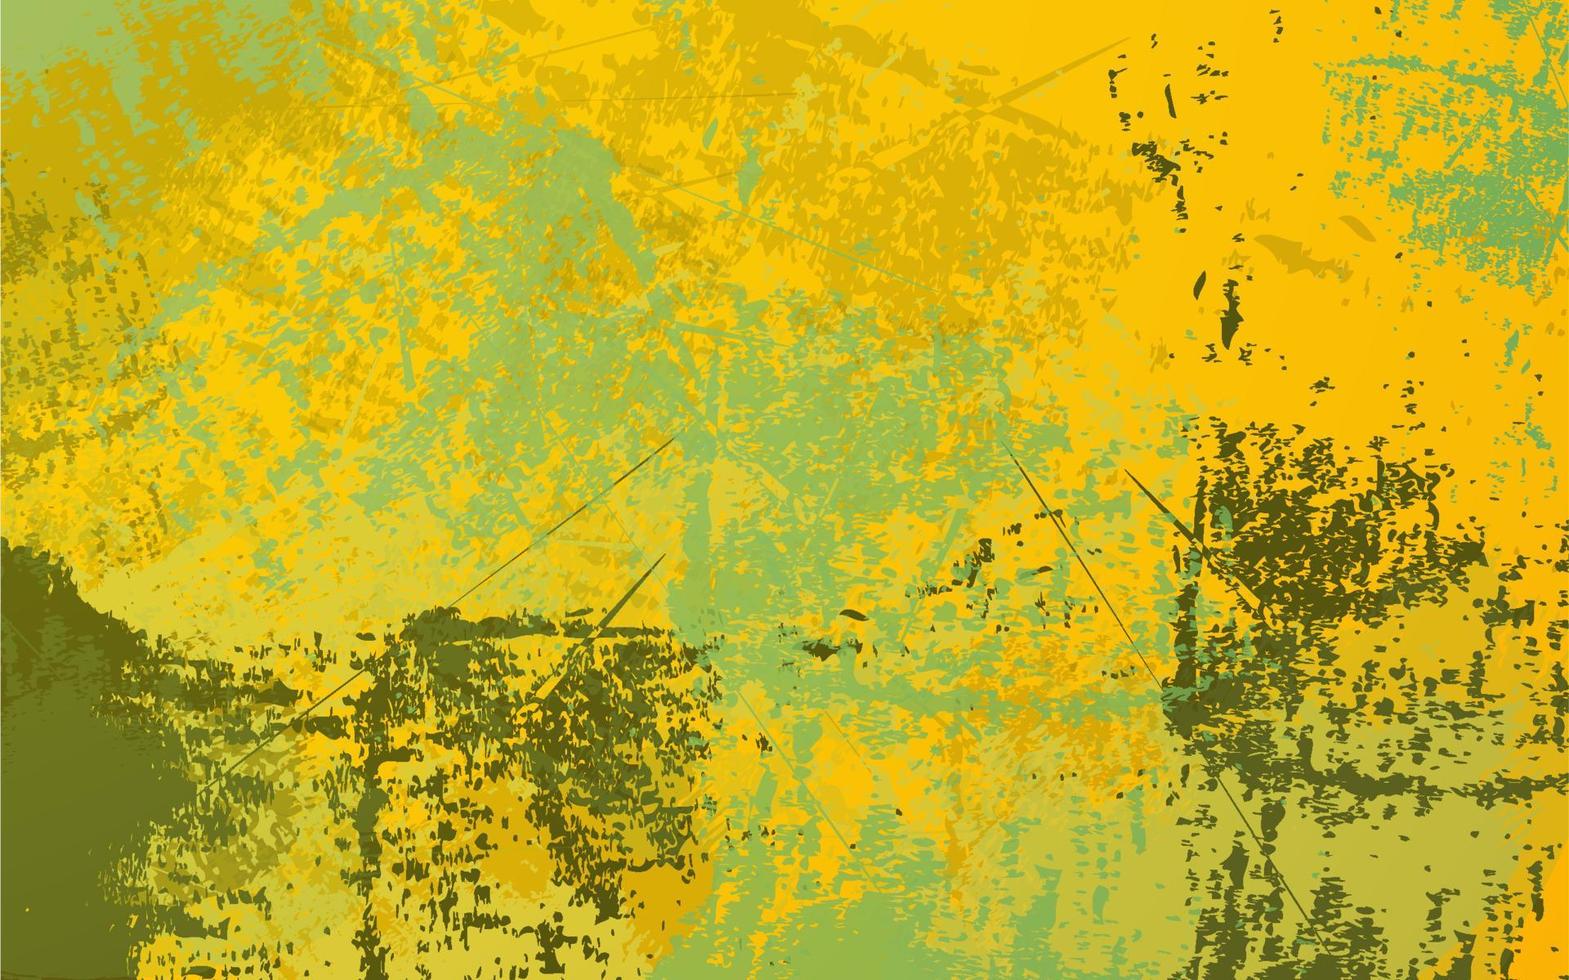 abstract grunge texture fond de couleur jaune et vert vecteur